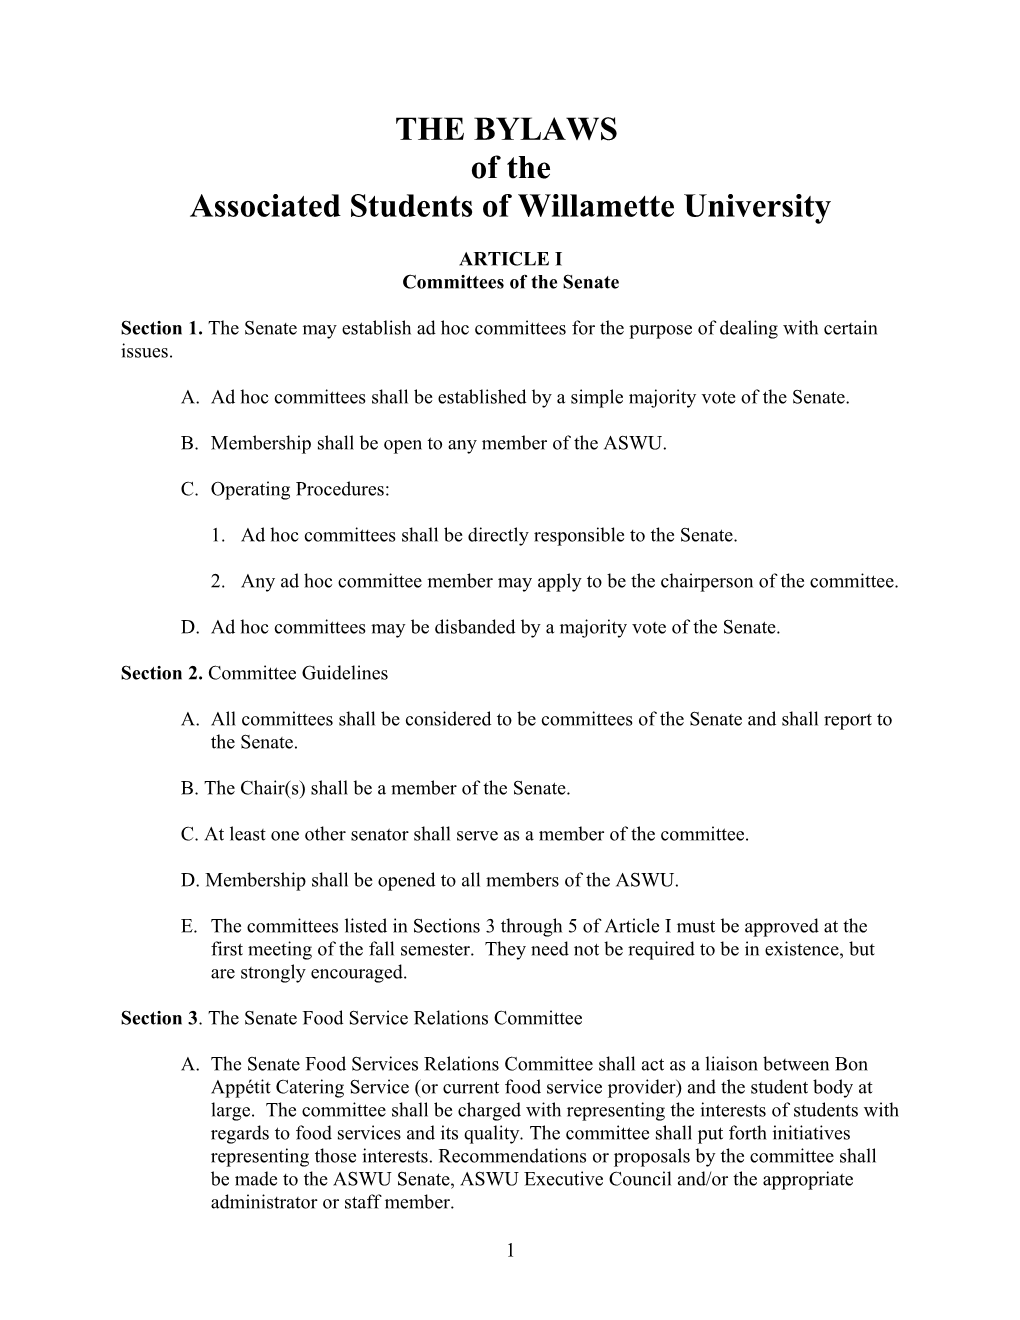 Associated Students of Willametteuniversity